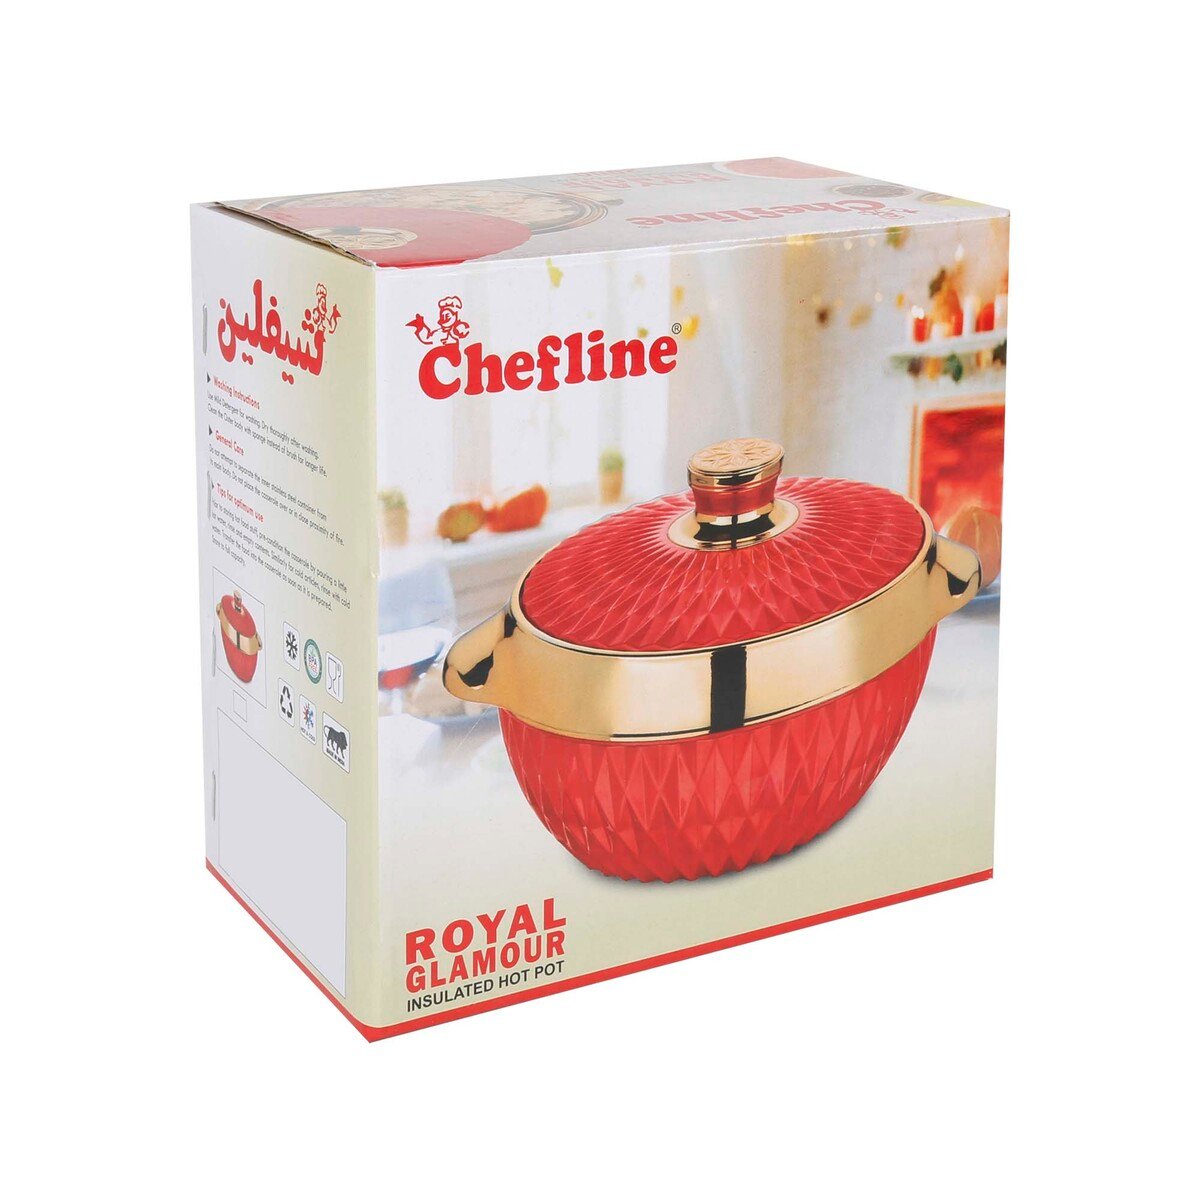 Chefline Plastic Insulated Hot Pot Royal Glamour, 4000 ml